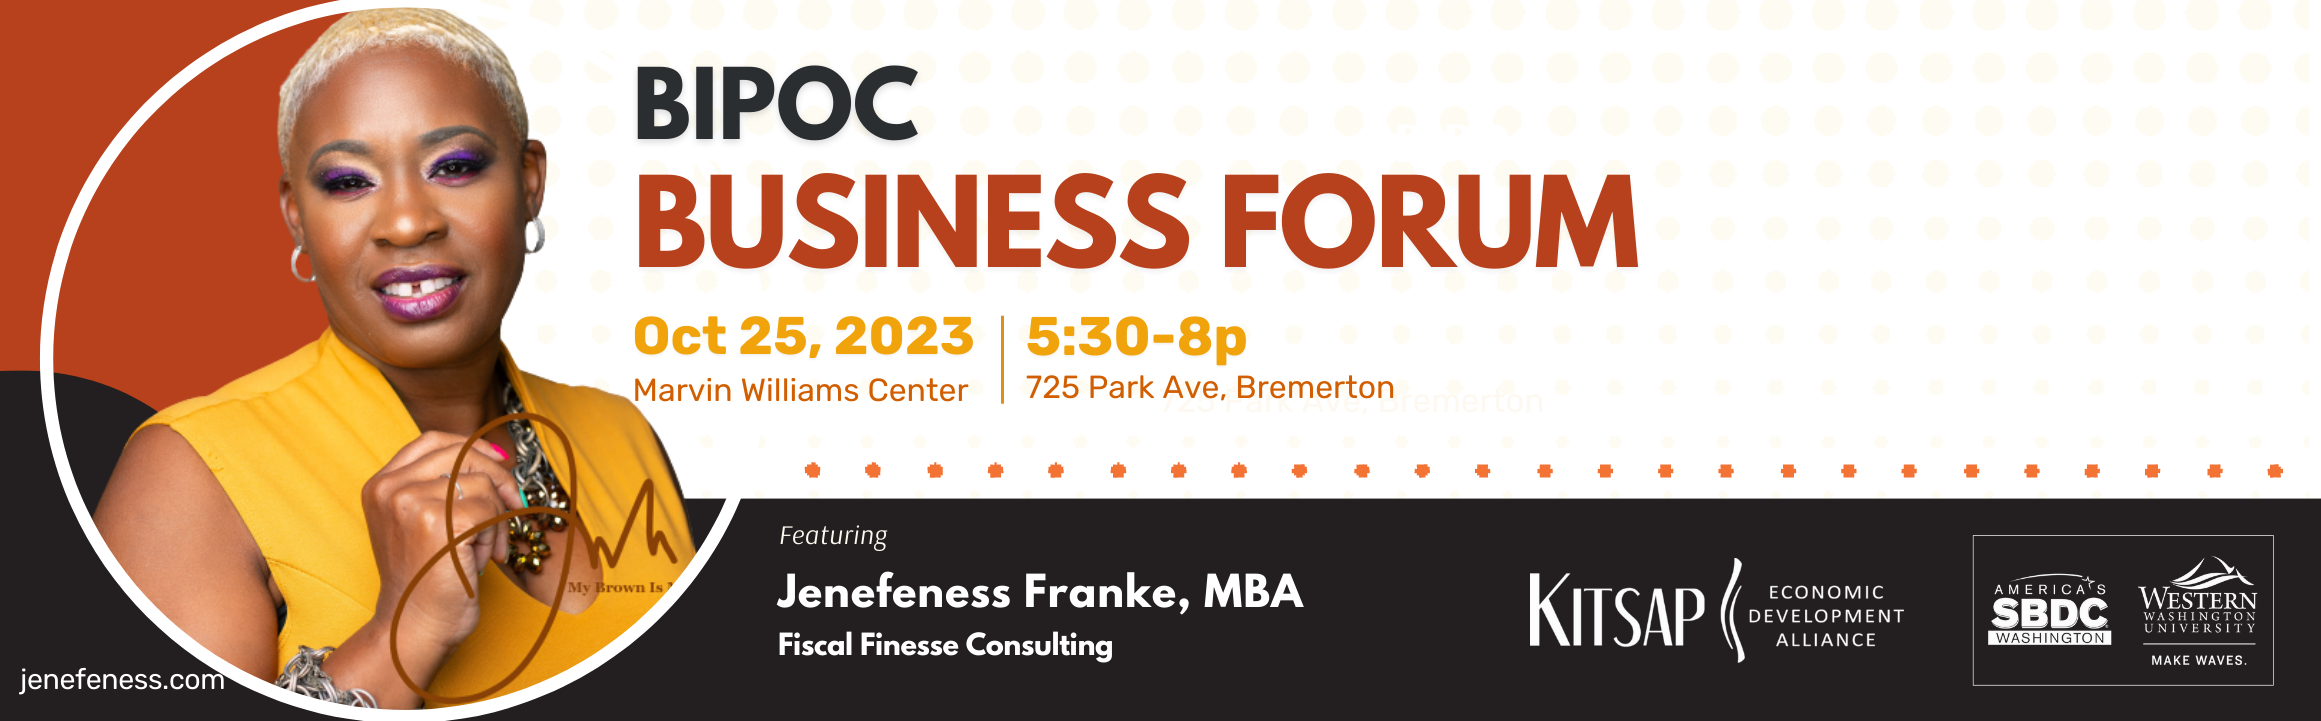 BIPOC Business Forum ad